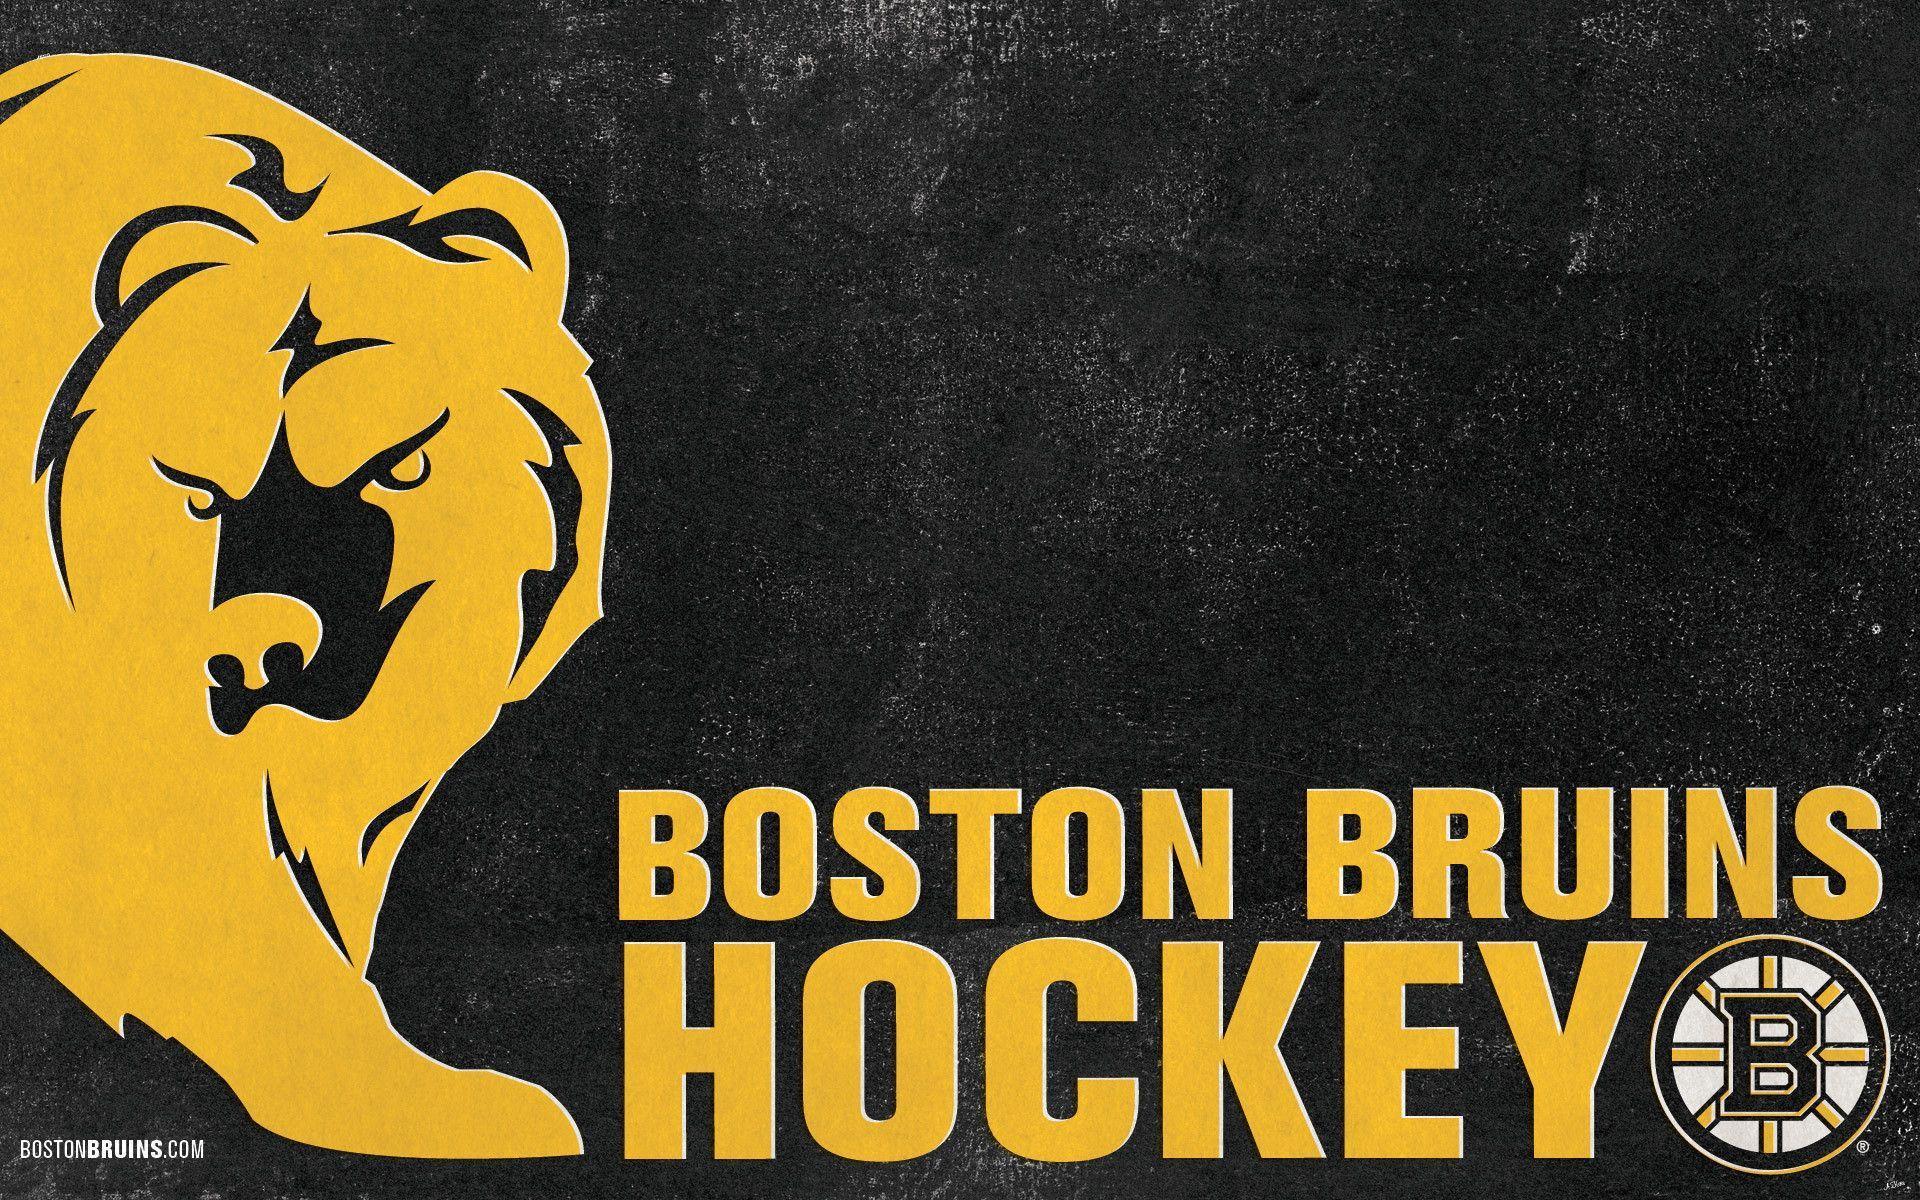 Boston Bruins image Bruins Logo HD wallpaper and background